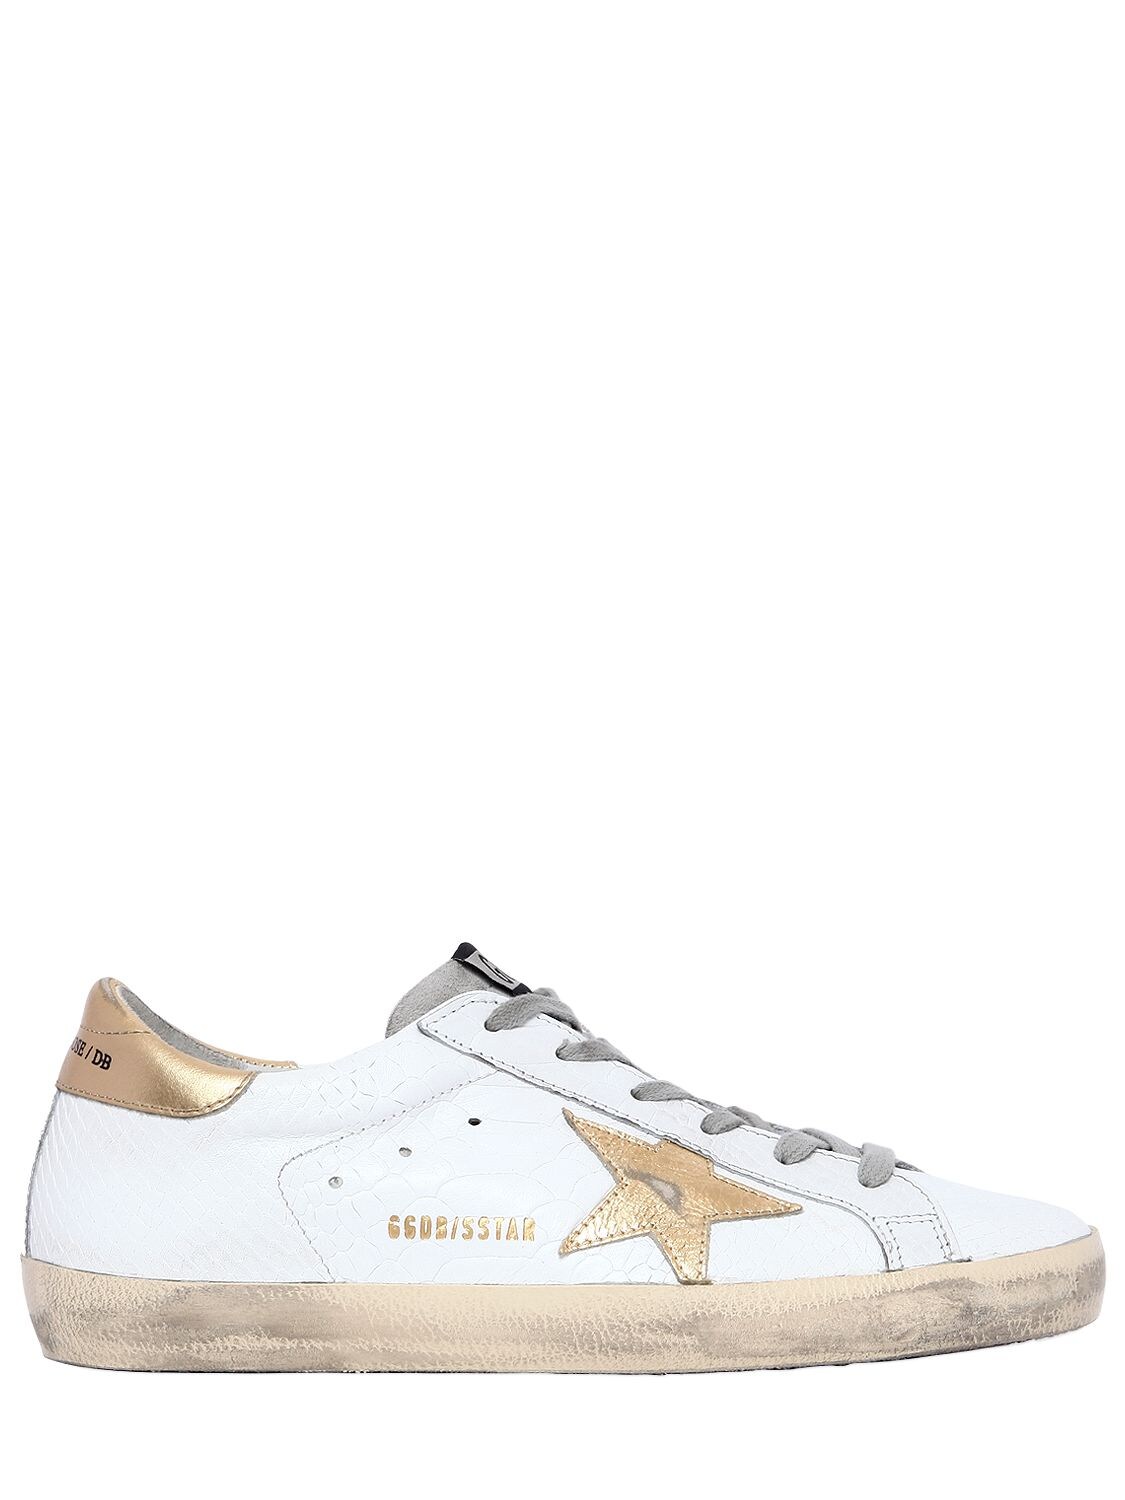 Golden Goose 20mm Super Star Embossed Leather Sneaker In White/gold